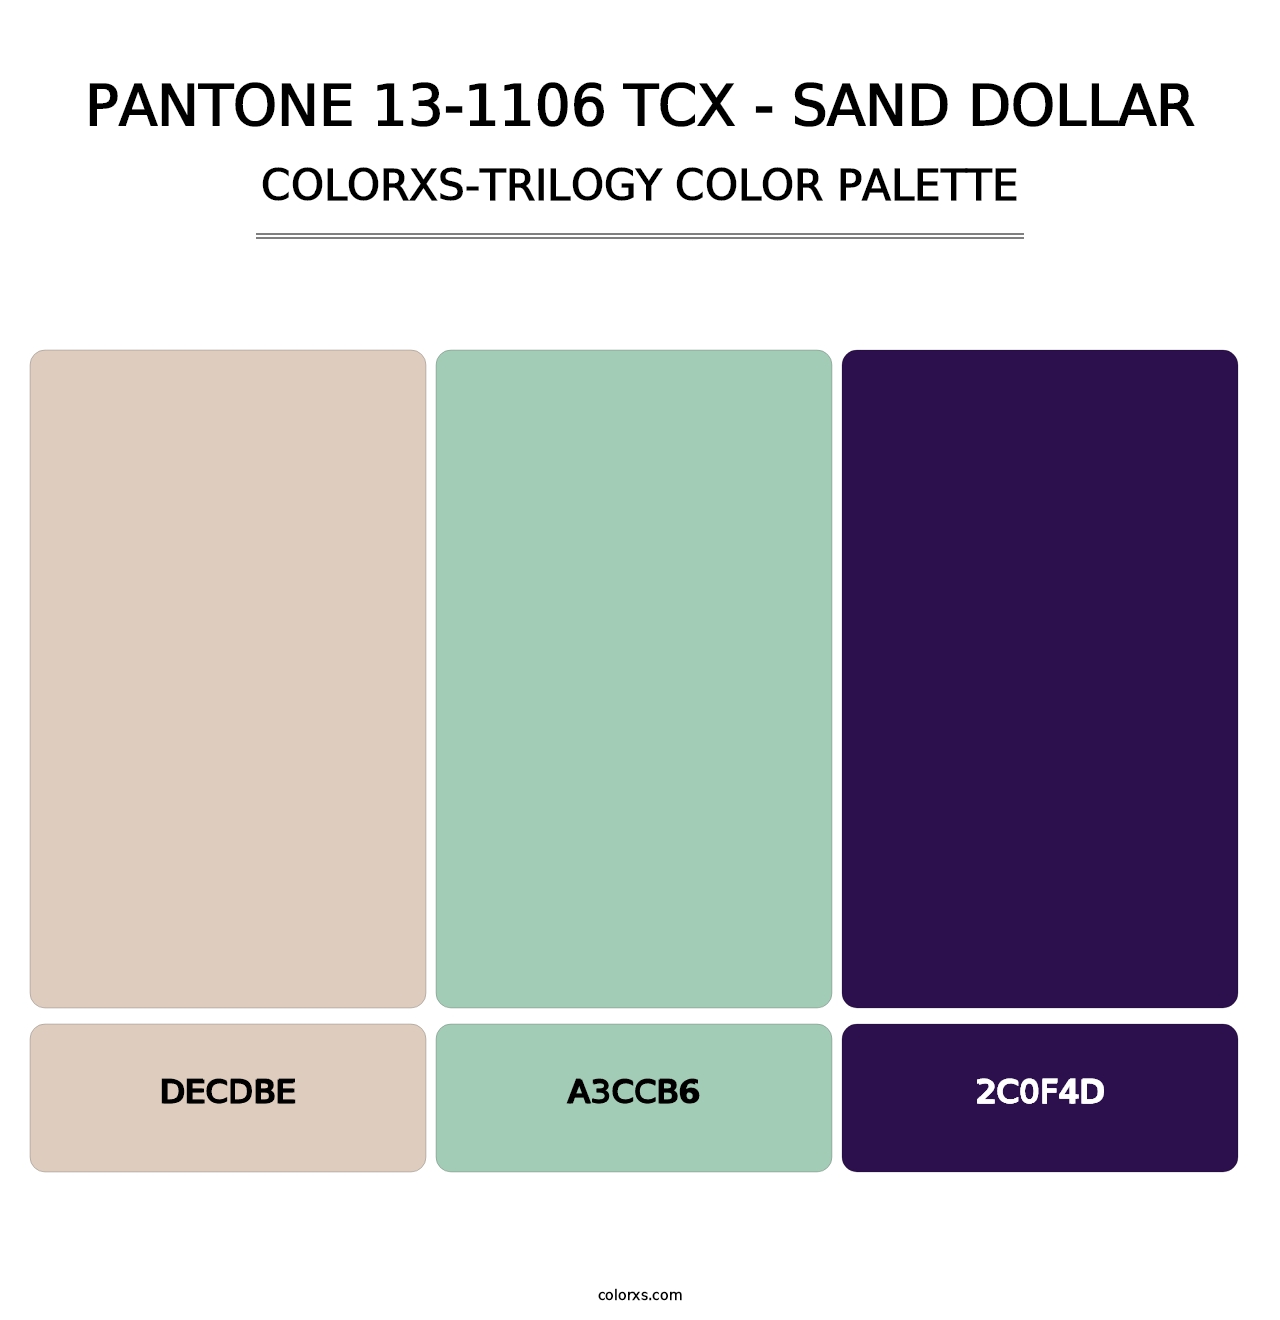 PANTONE 13-1106 TCX - Sand Dollar - Colorxs Trilogy Palette